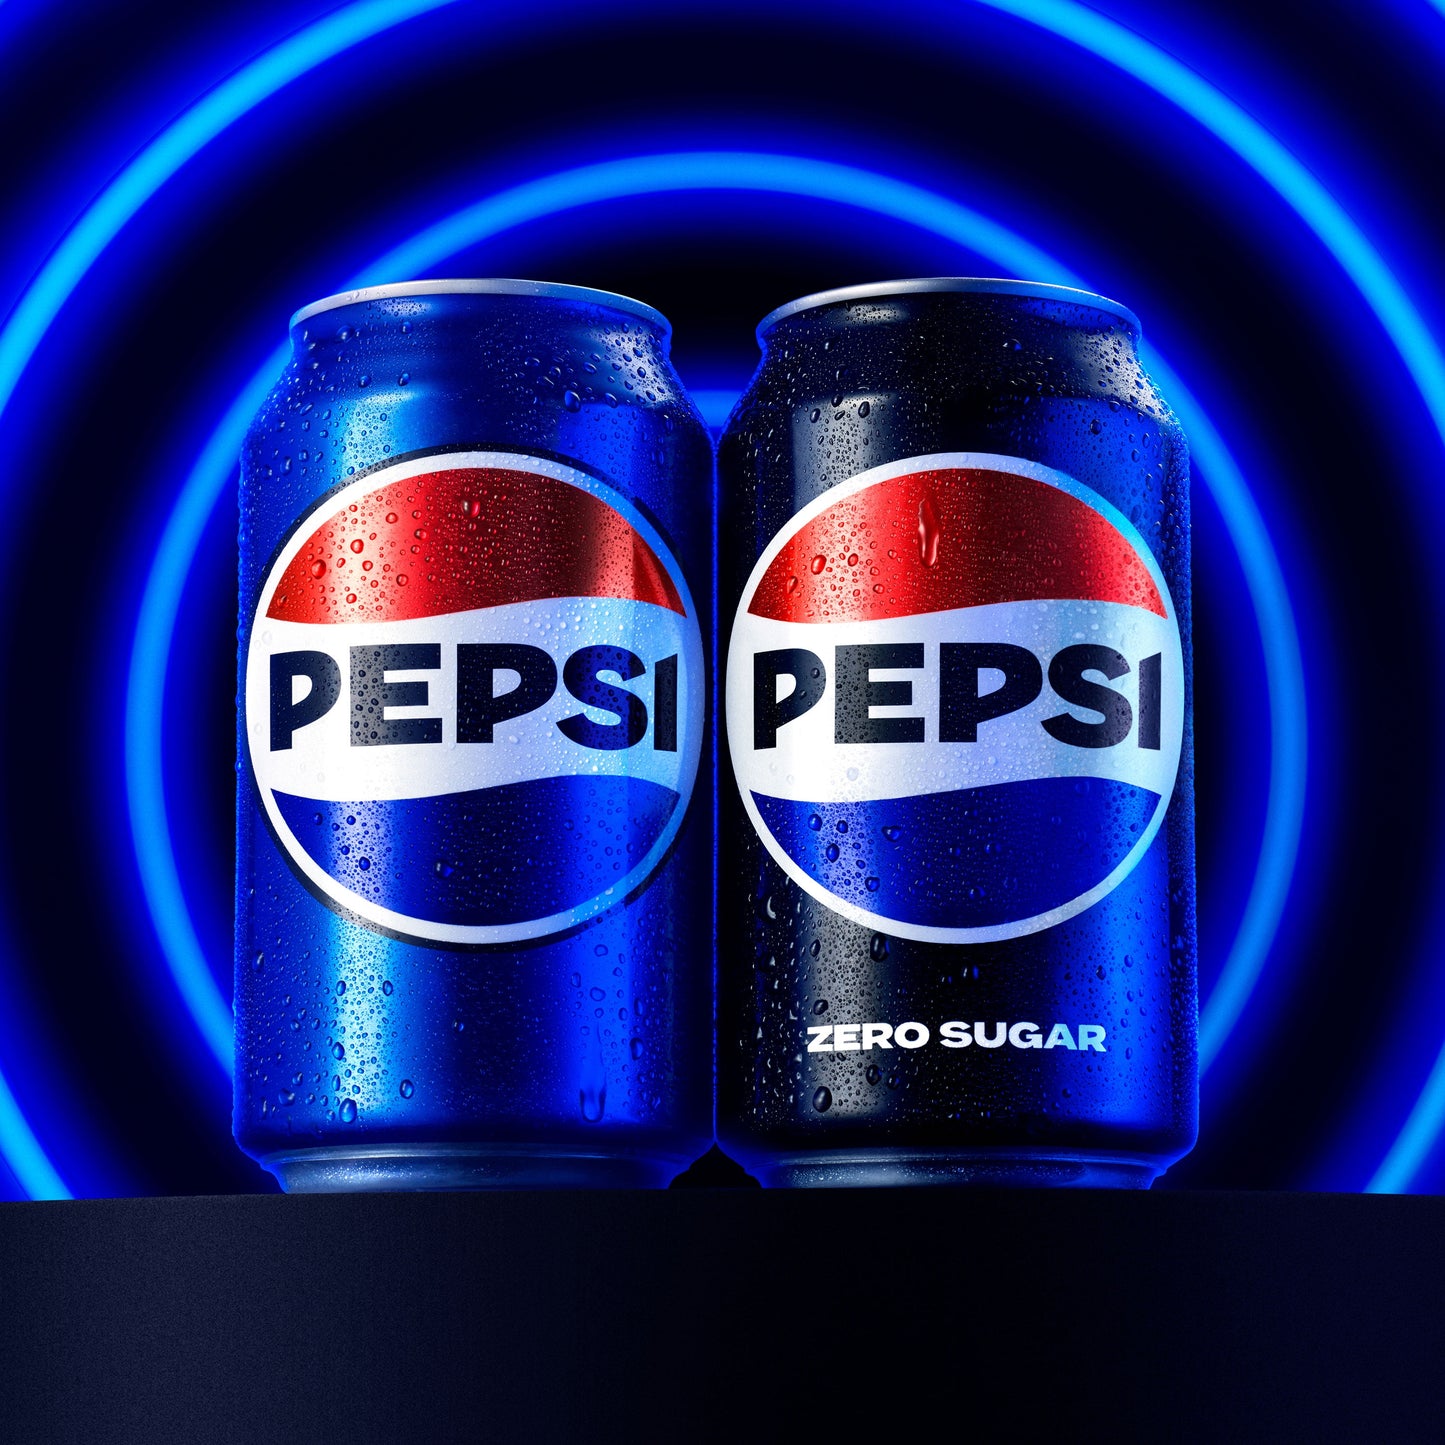 Diet Pepsi Soda Pop, 12 fl oz, 24 Pack Cans